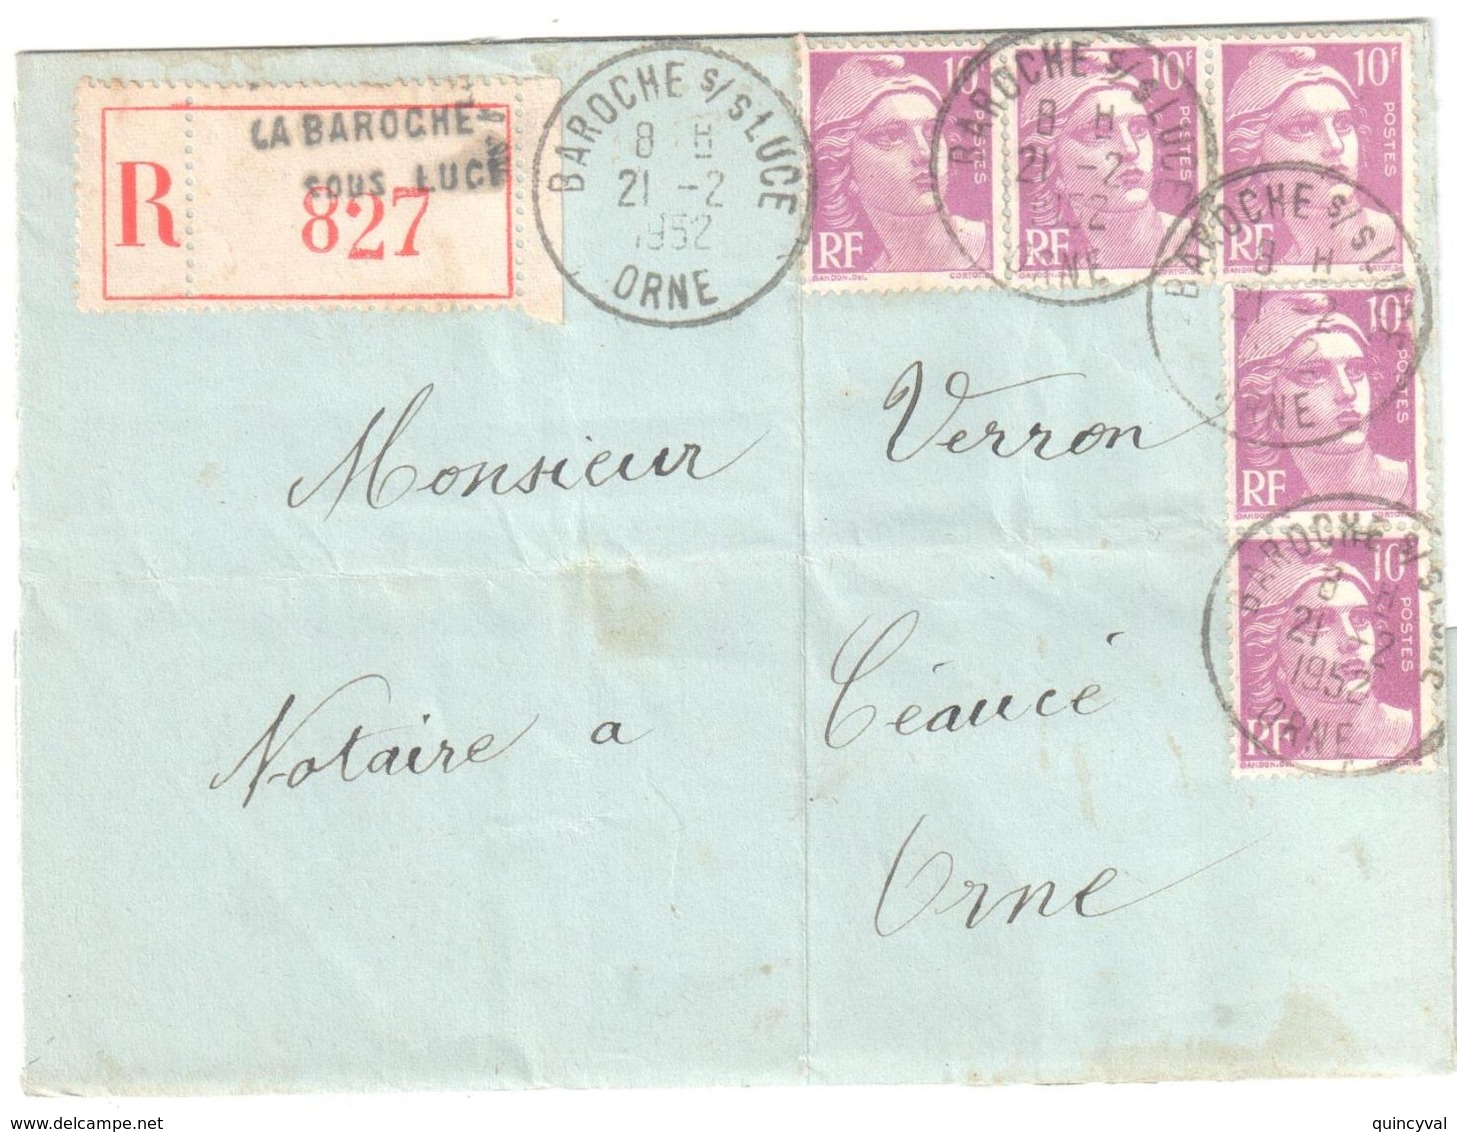 BAROCHE Sous LUCE (LA) Orne Lettre Recommandée 10 F Gandon Lilas Yv 811 Ob 21 2 1952 - Briefe U. Dokumente